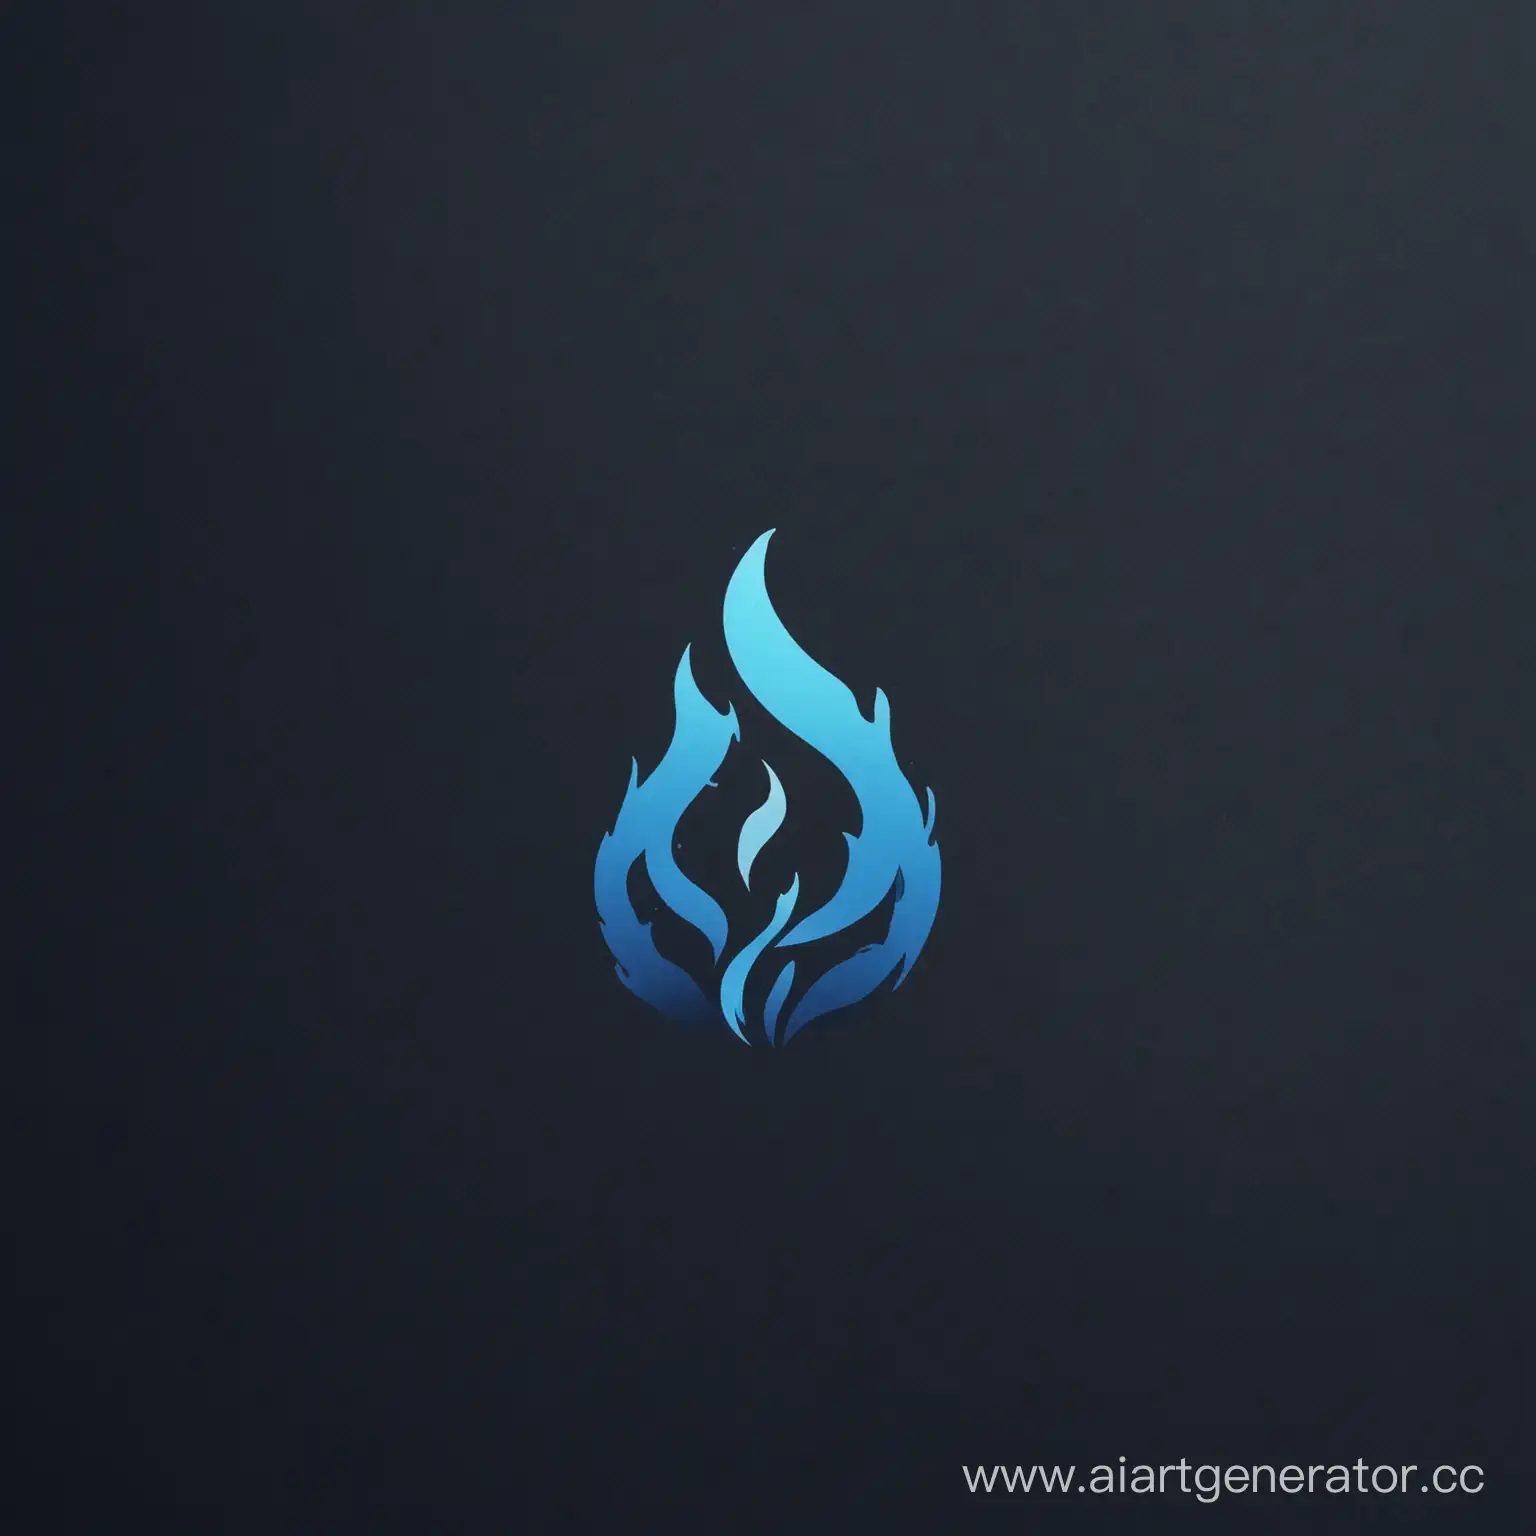 Minimalistic-Monochrome-Logo-of-Blue-Fire